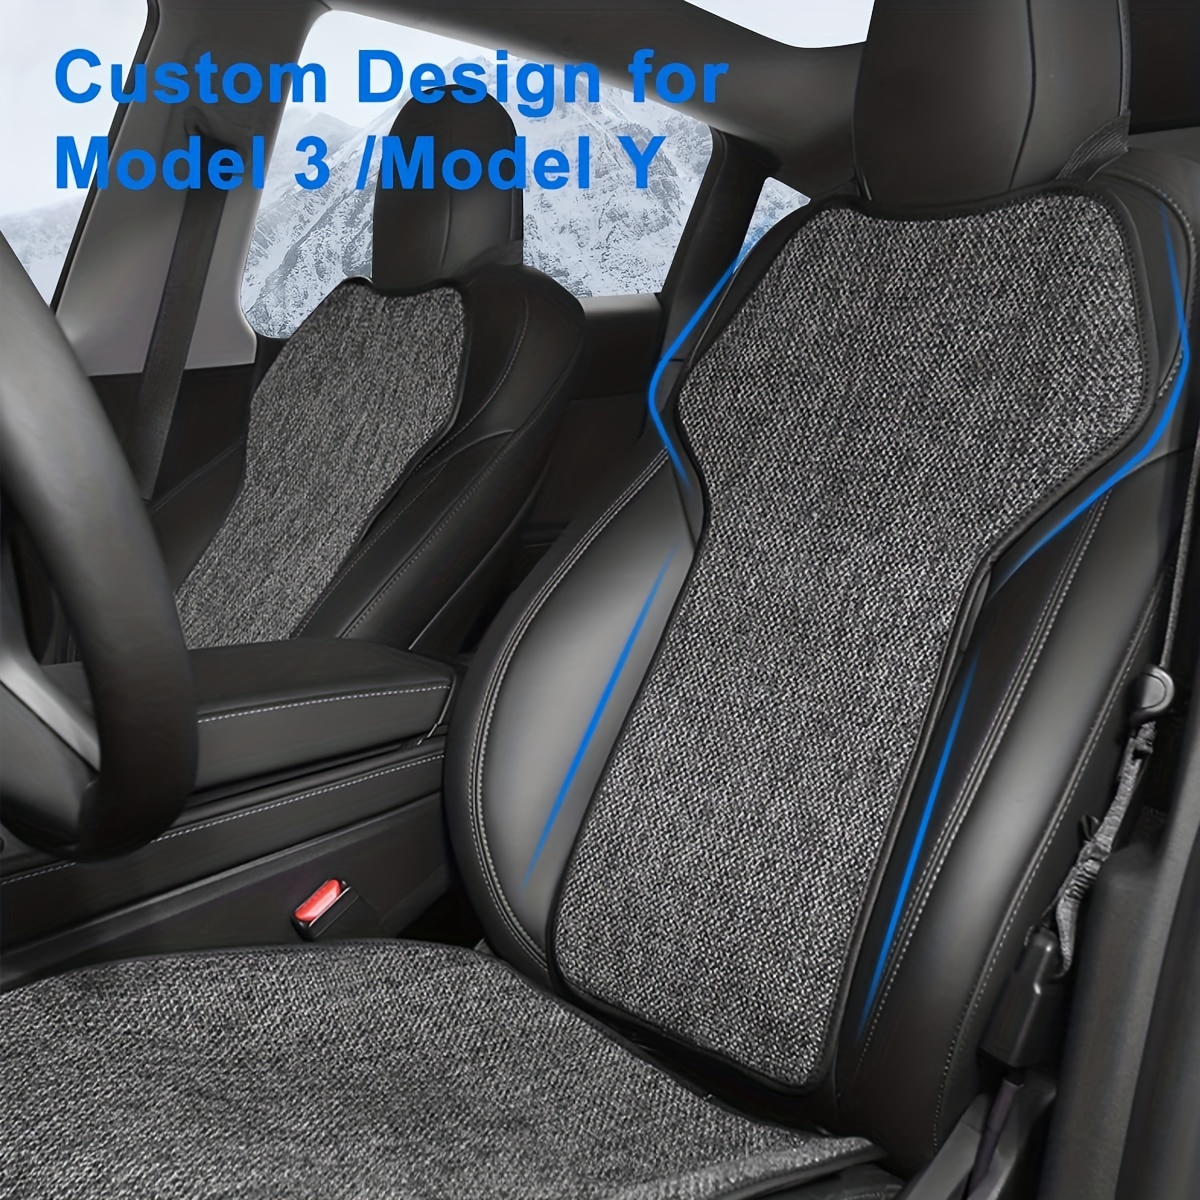 https://img.kwcdn.com/product/2016-2022-front-row-car-seat-protector/d69d2f15w98k18-89fd4c2c/Fancyalgo/VirtualModelMatting/c4d55d27a58576e8a90897d1f1058ec7.jpg